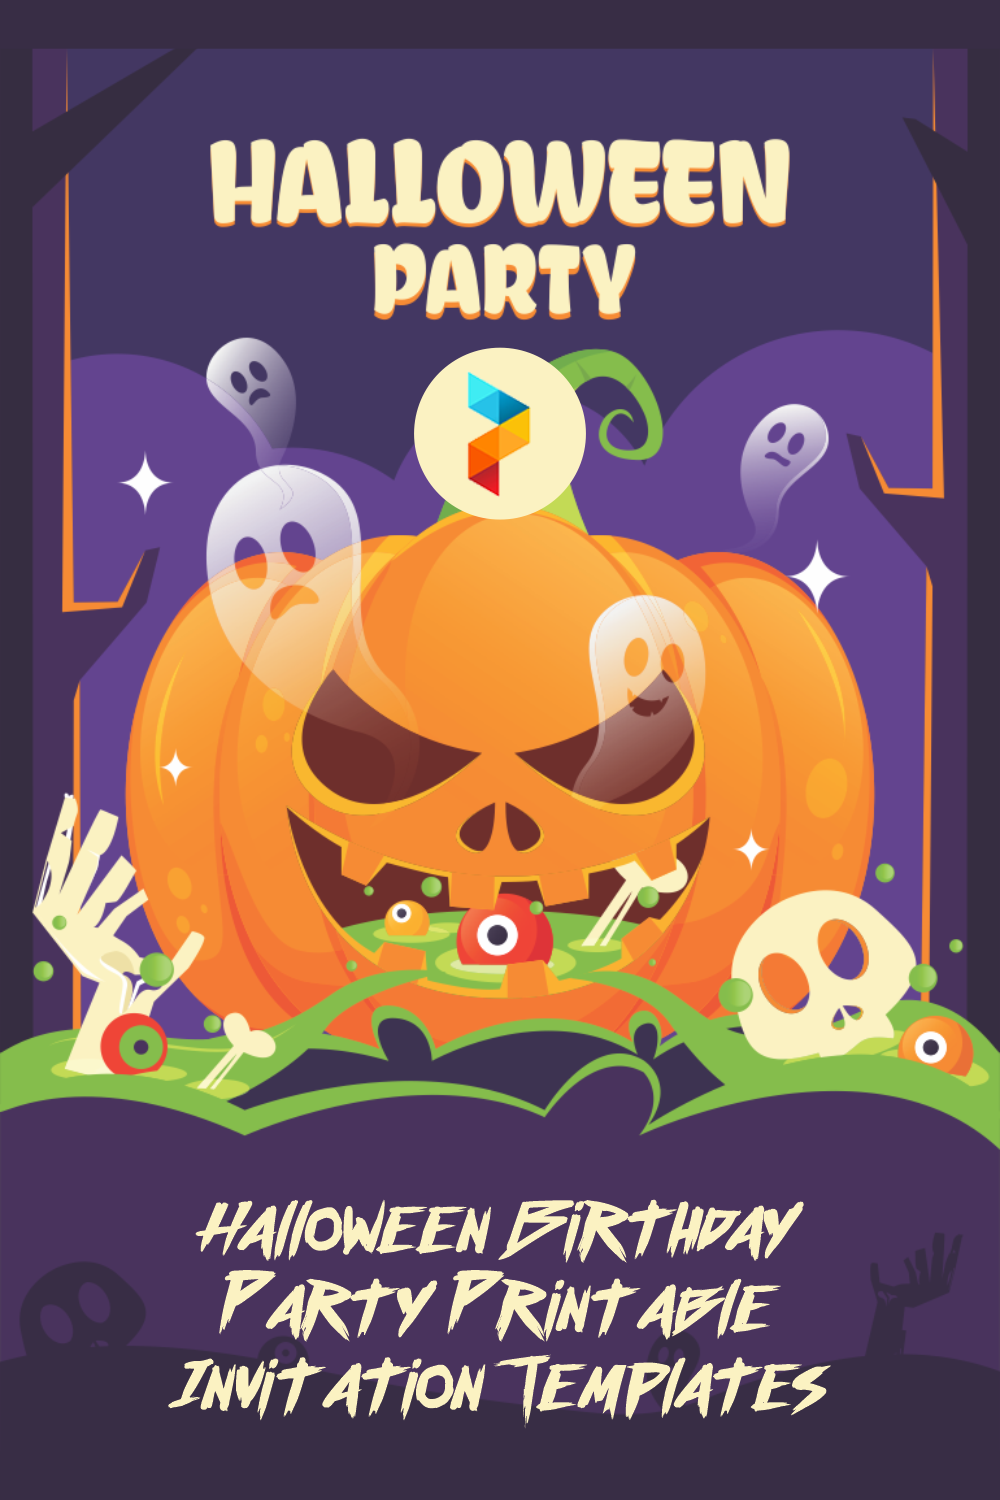 Halloween Birthday Party Printable Invitation Templates